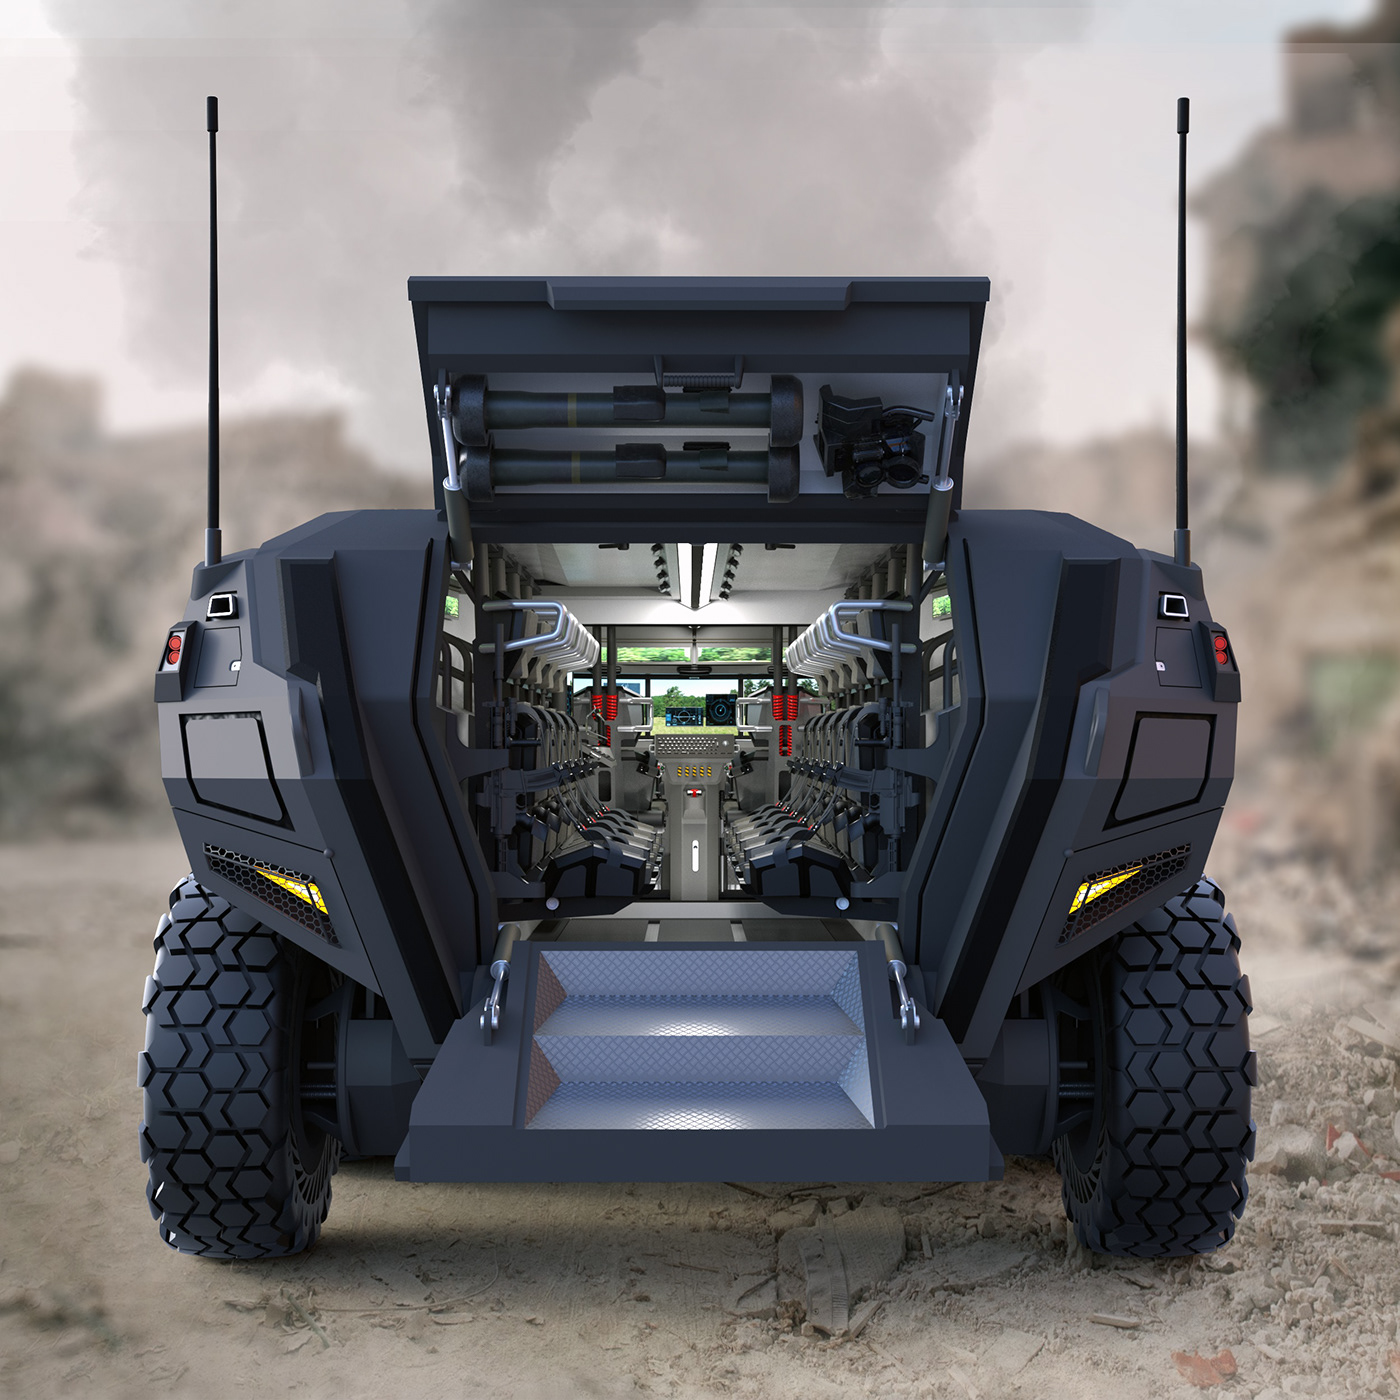 hybrid Military Vehicle Combat concept conceptual design car design Vehicle Design product design  Hybrid Vehicle